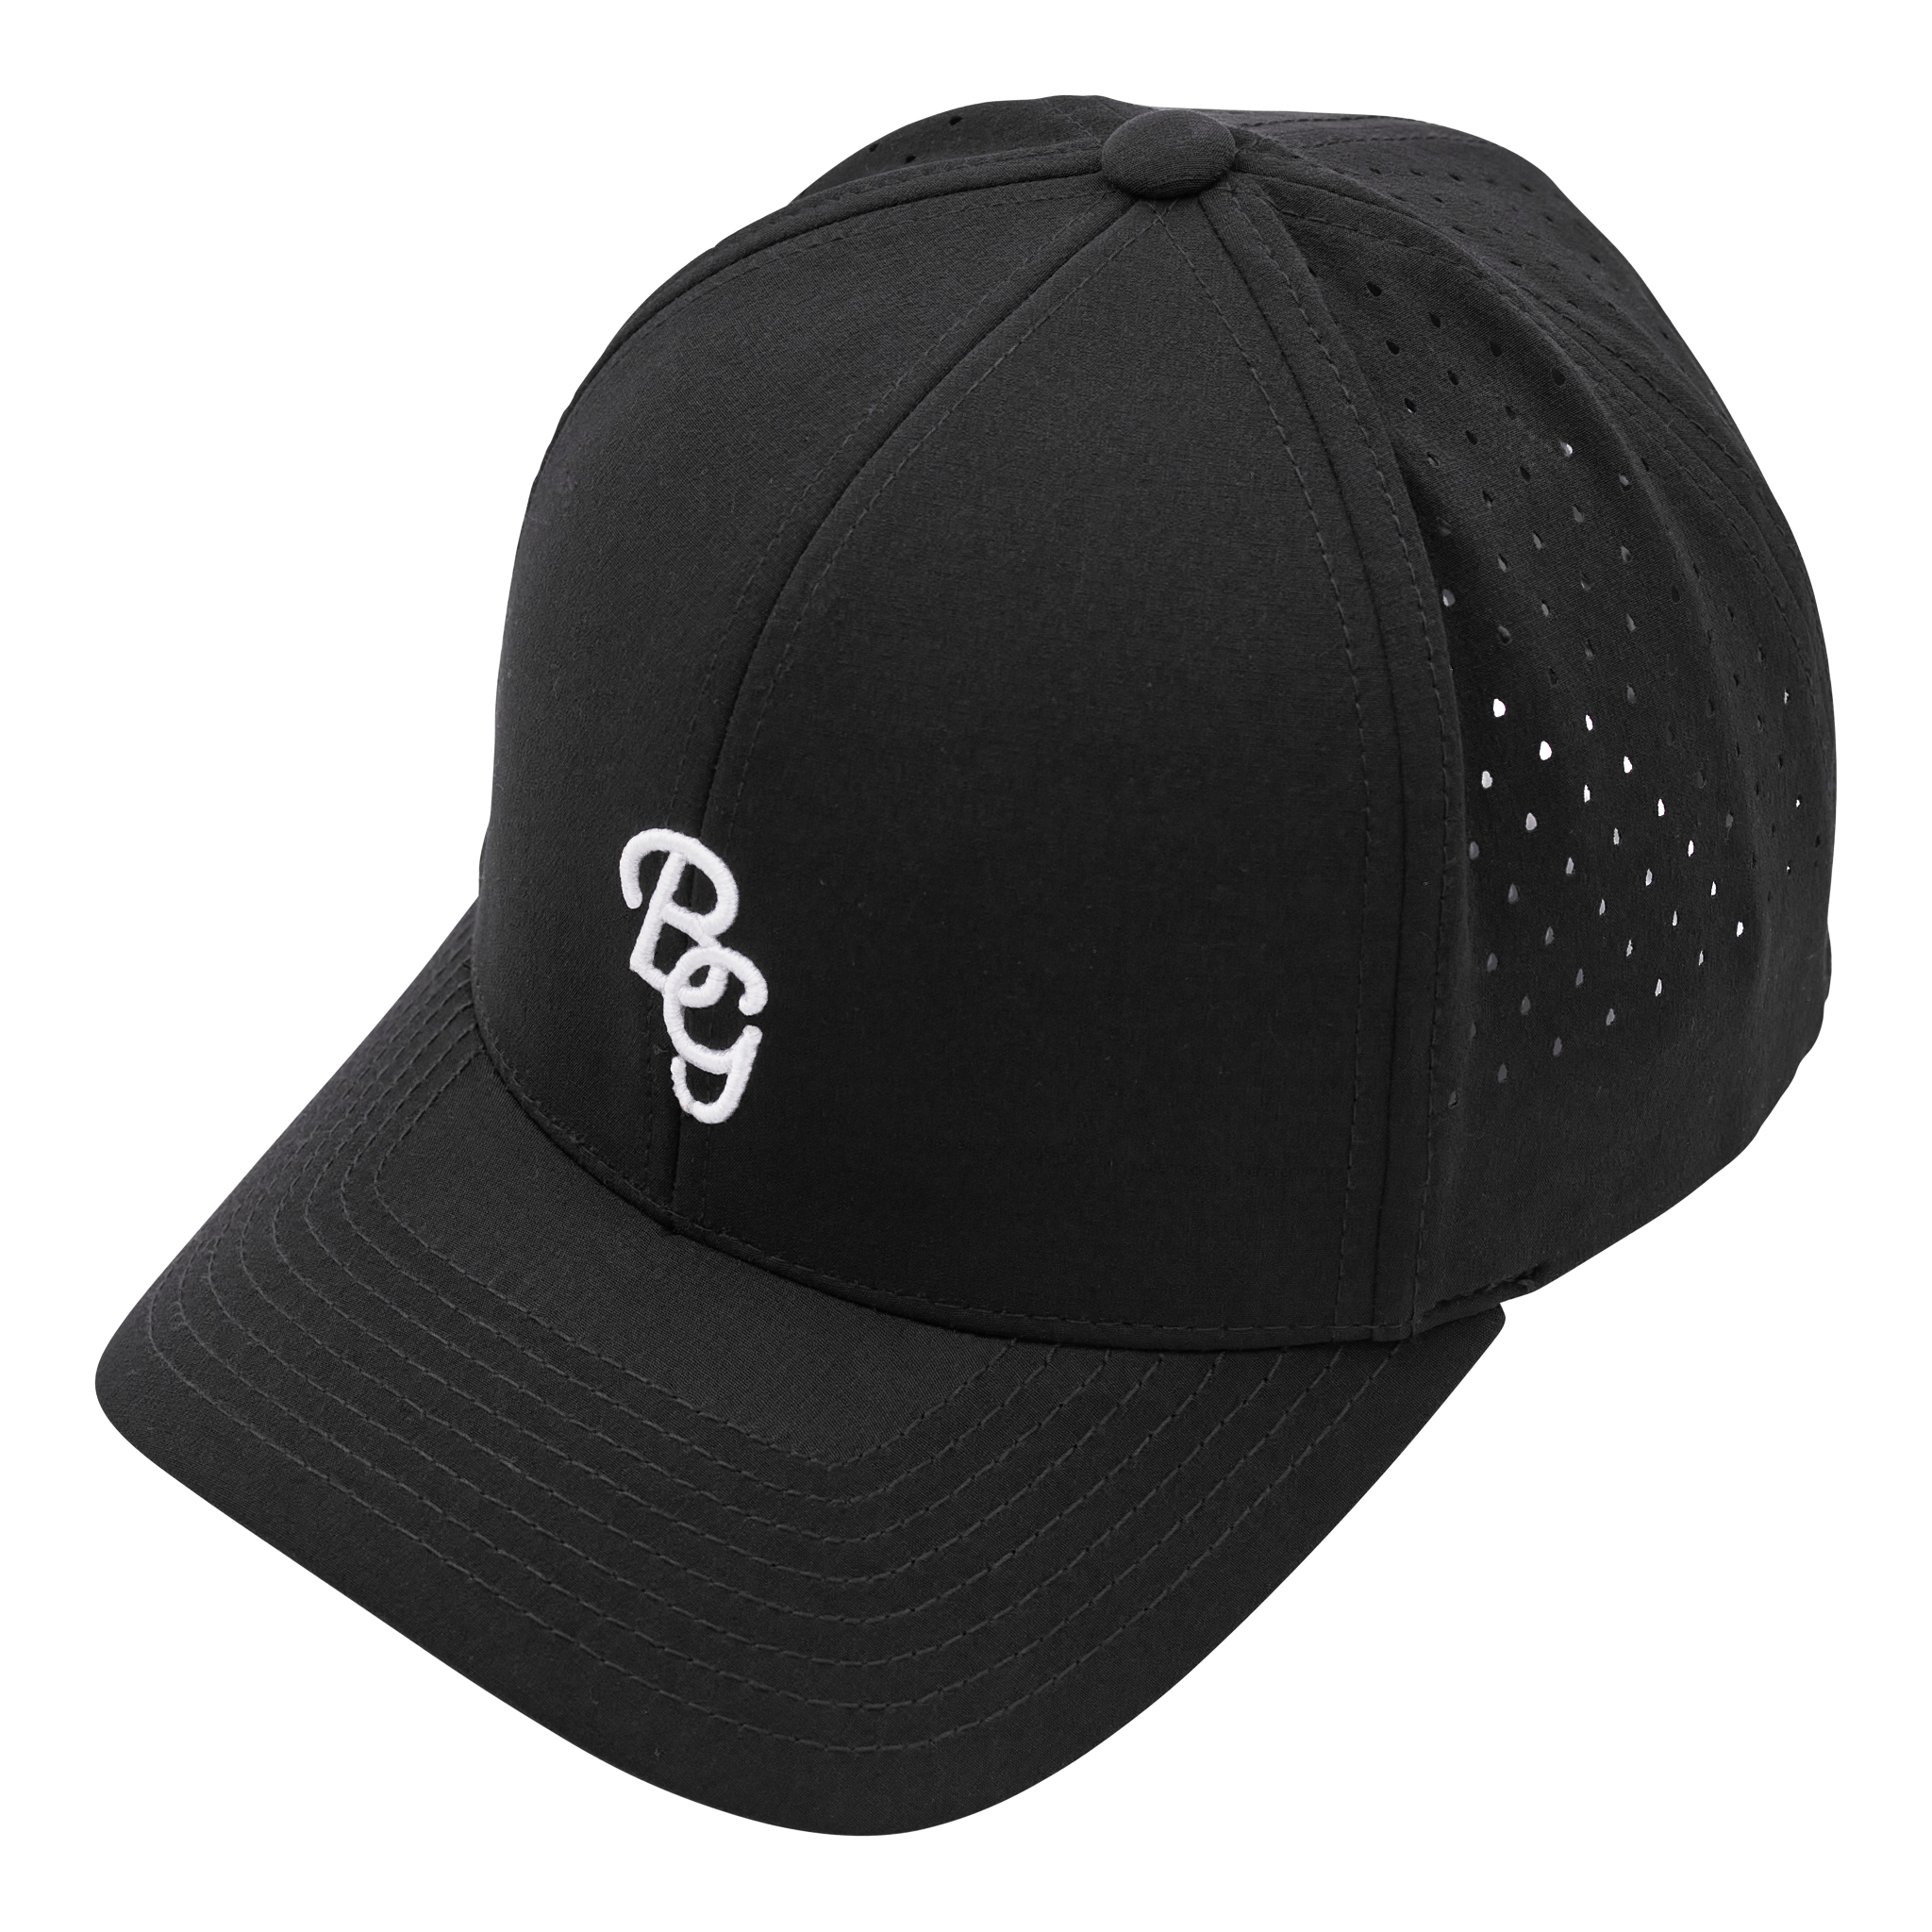 Bettinardi BG Initials Black Fitted Performance Hat